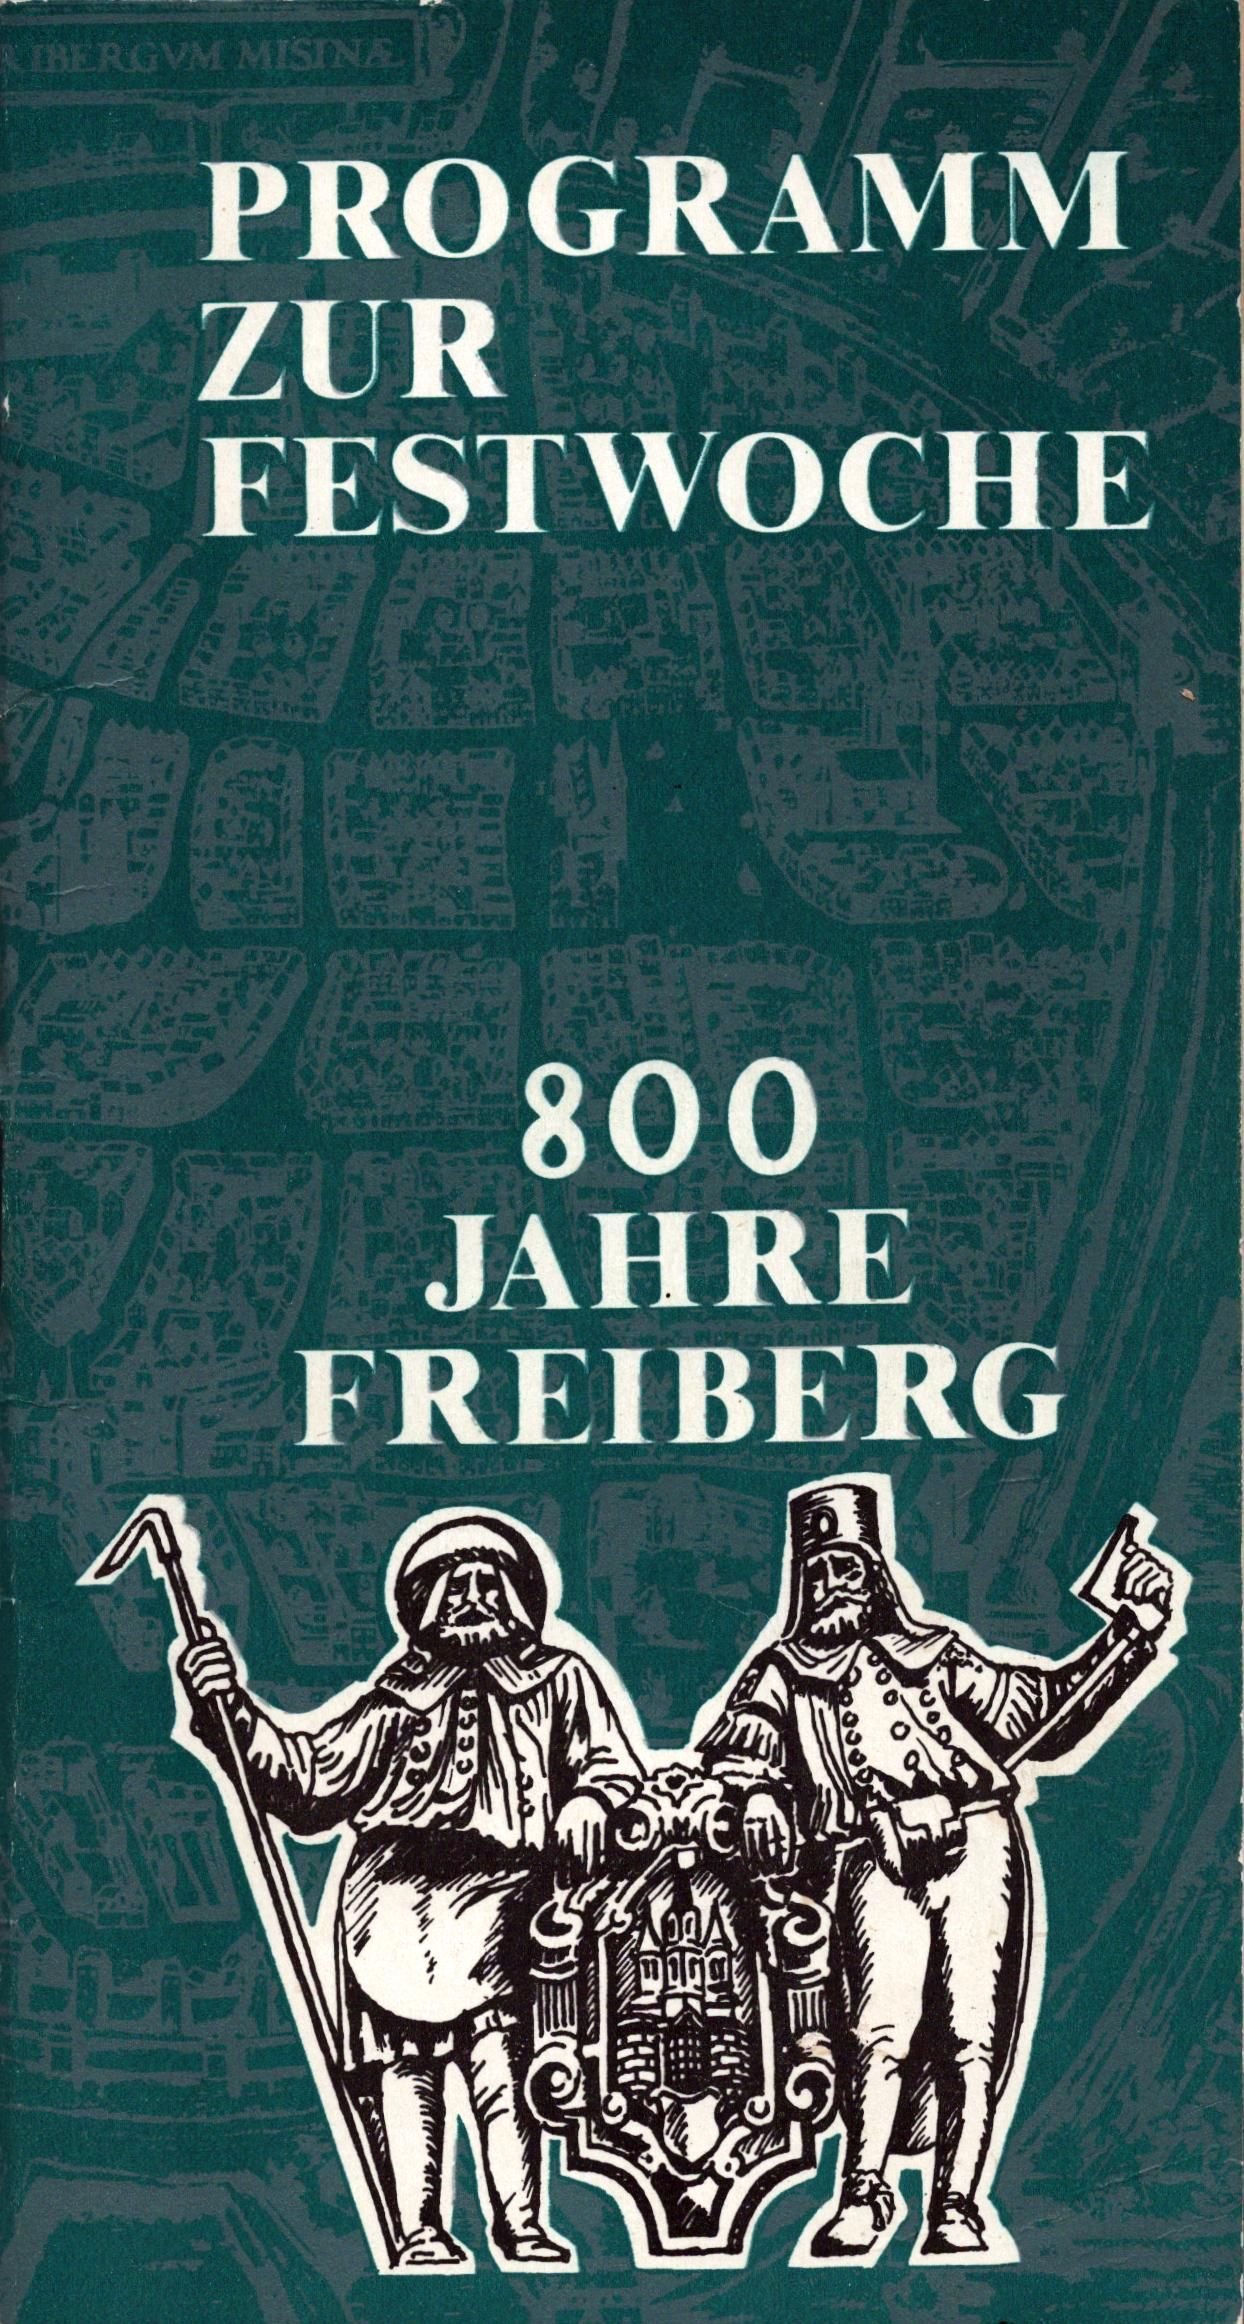 Programm zur Festwoche - 800 Jahre Freiberg (Archiv SAXONIA-FREIBERG-STIFTUNG CC BY-NC-SA)